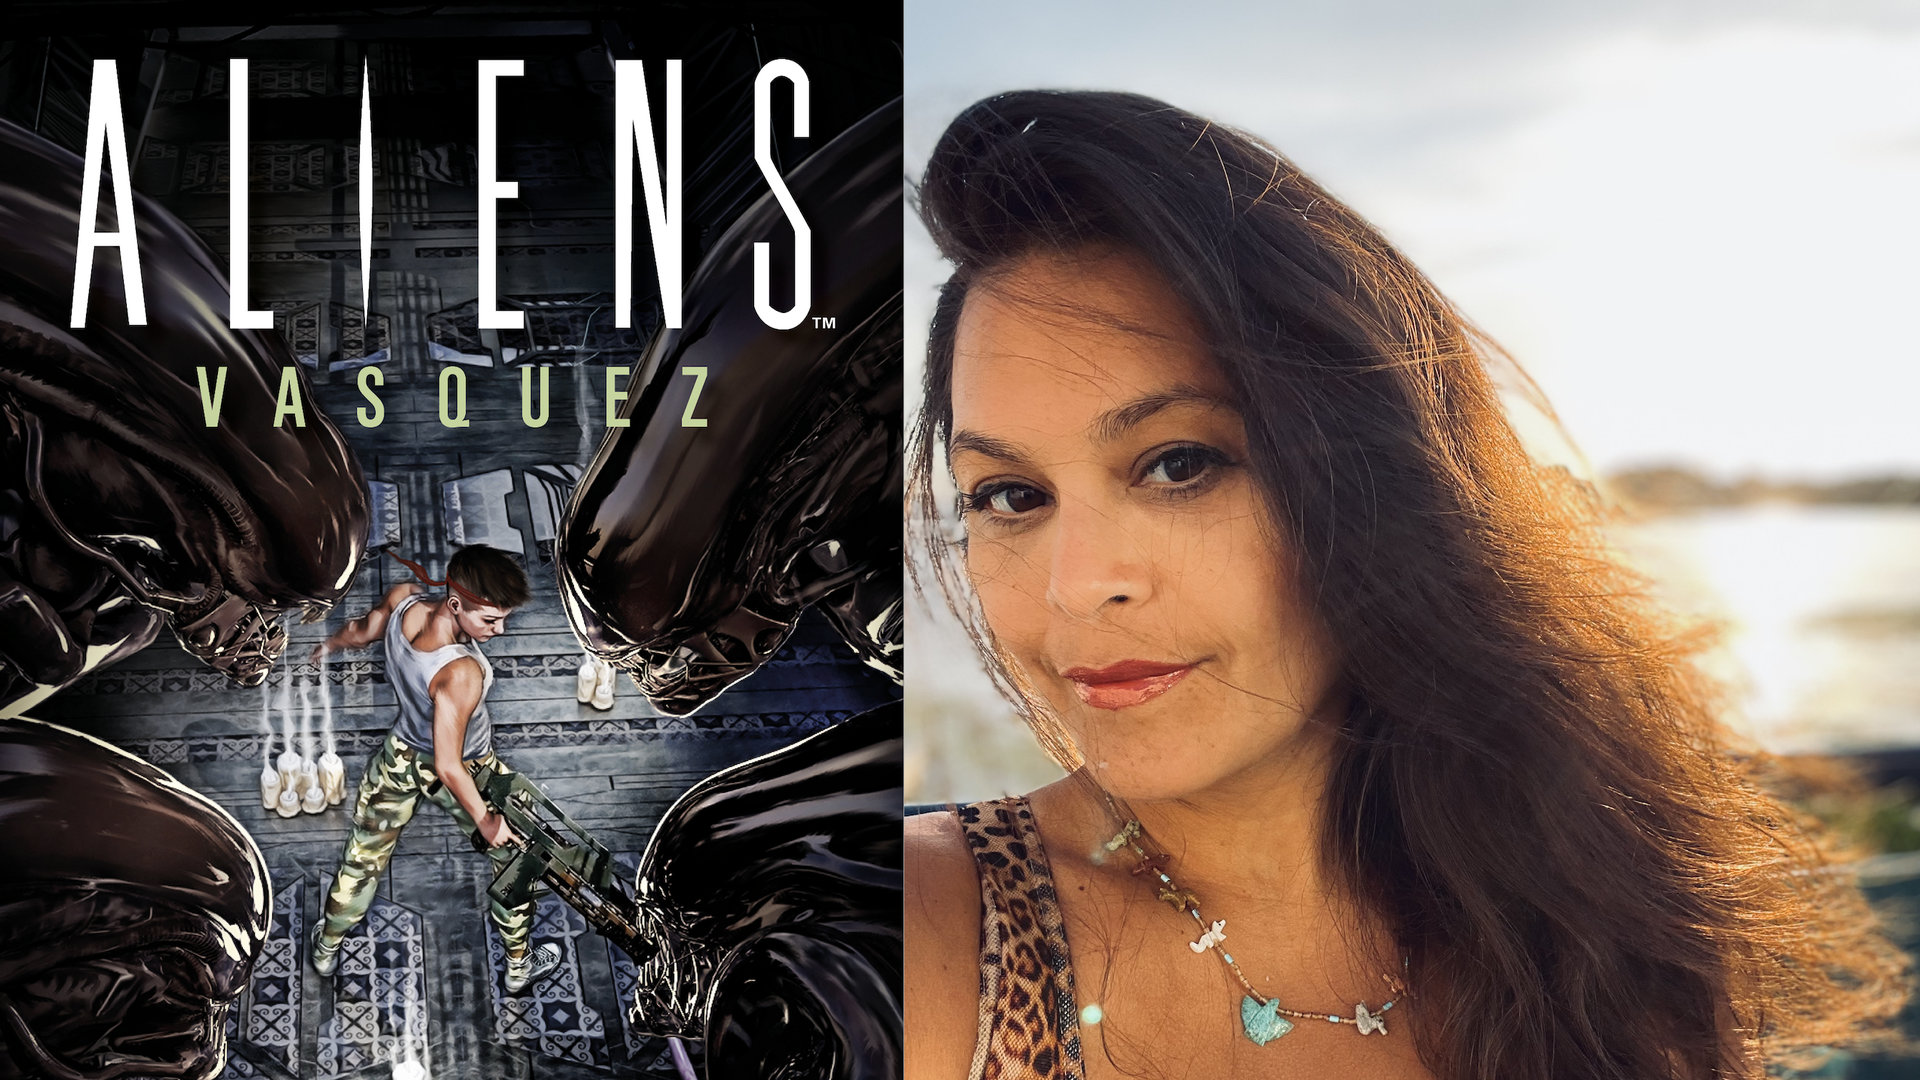 A cover of the novel "Aliens: Vasquez" along with author Violet Castro.